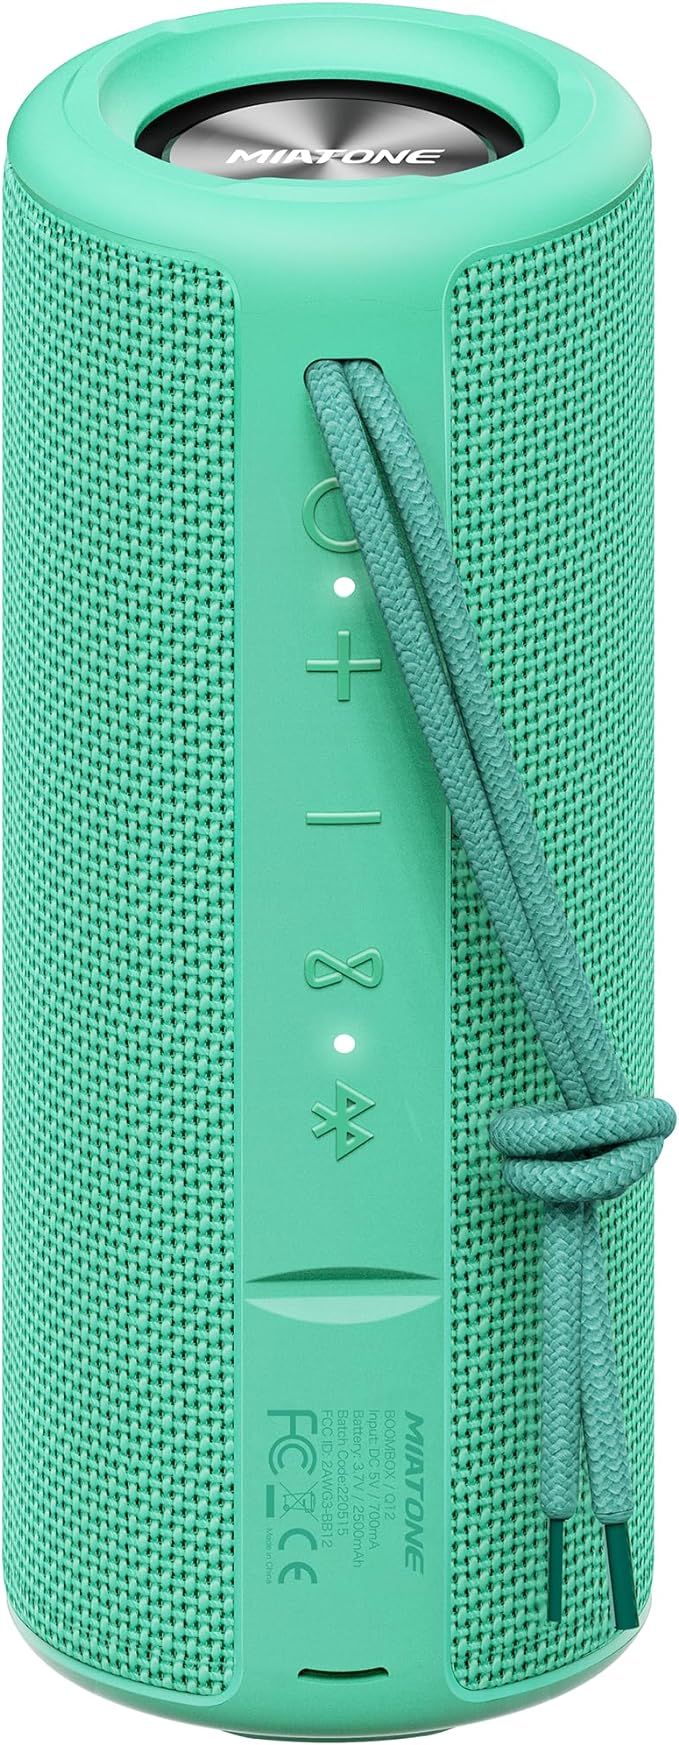 MIATONE Boombox Portable Bluetooth Speaker, for Her Him Women Men - Green | Amazon (US)